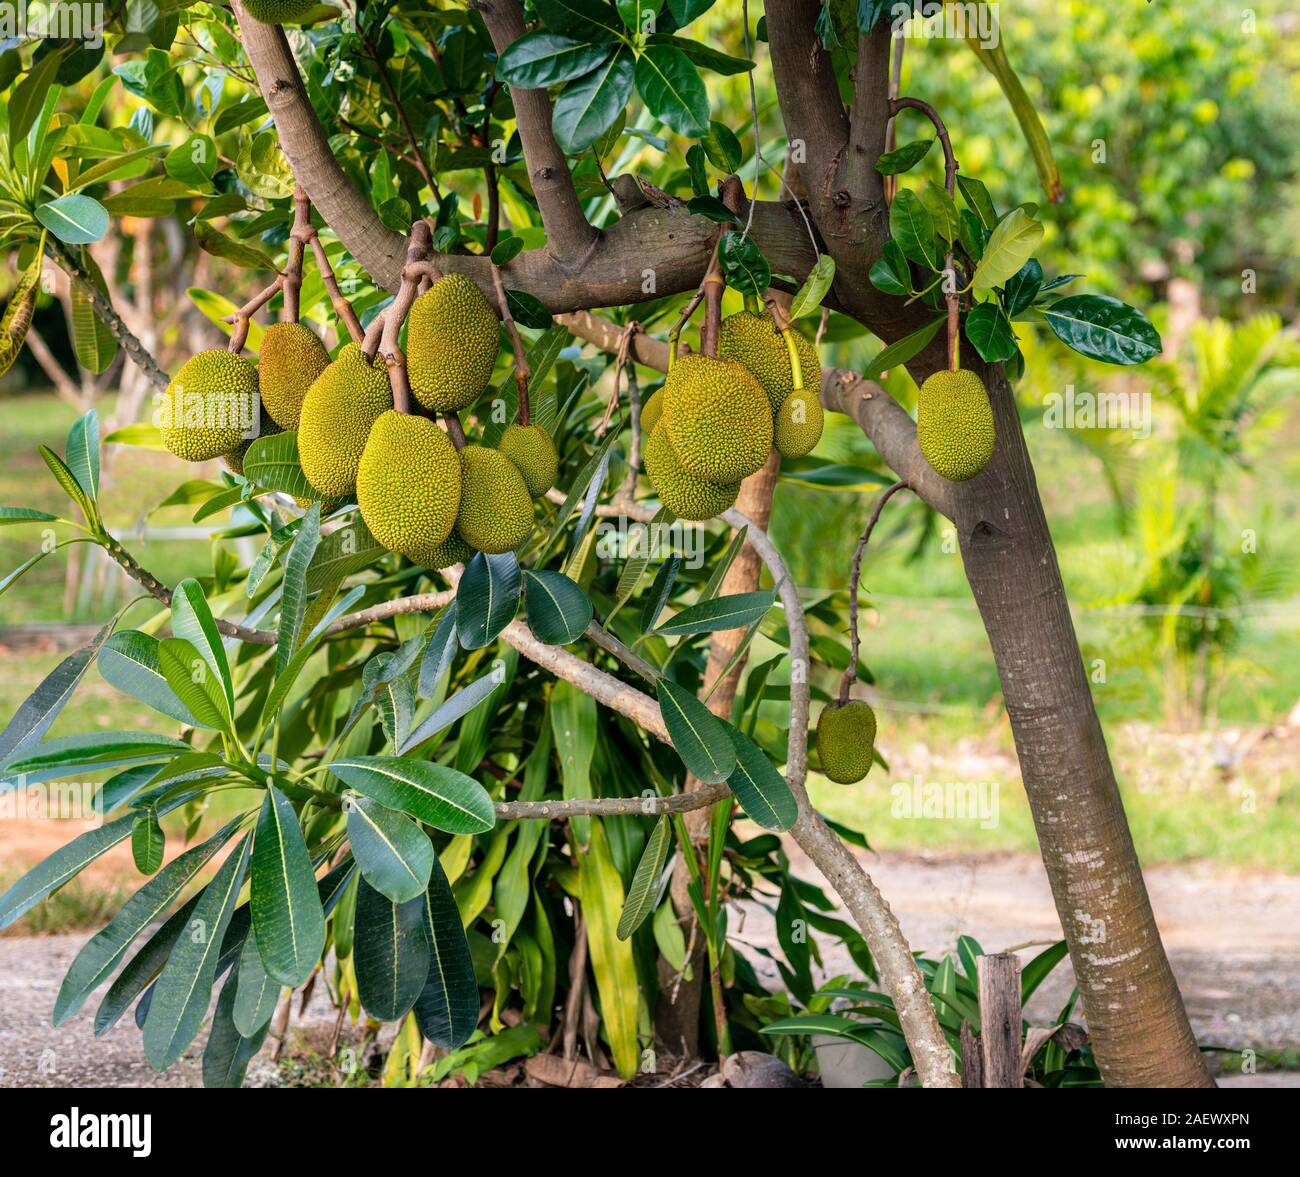 Juicy jackfruit hanging on tree Thailand. It is a seasonal time fruit. Stock Photo